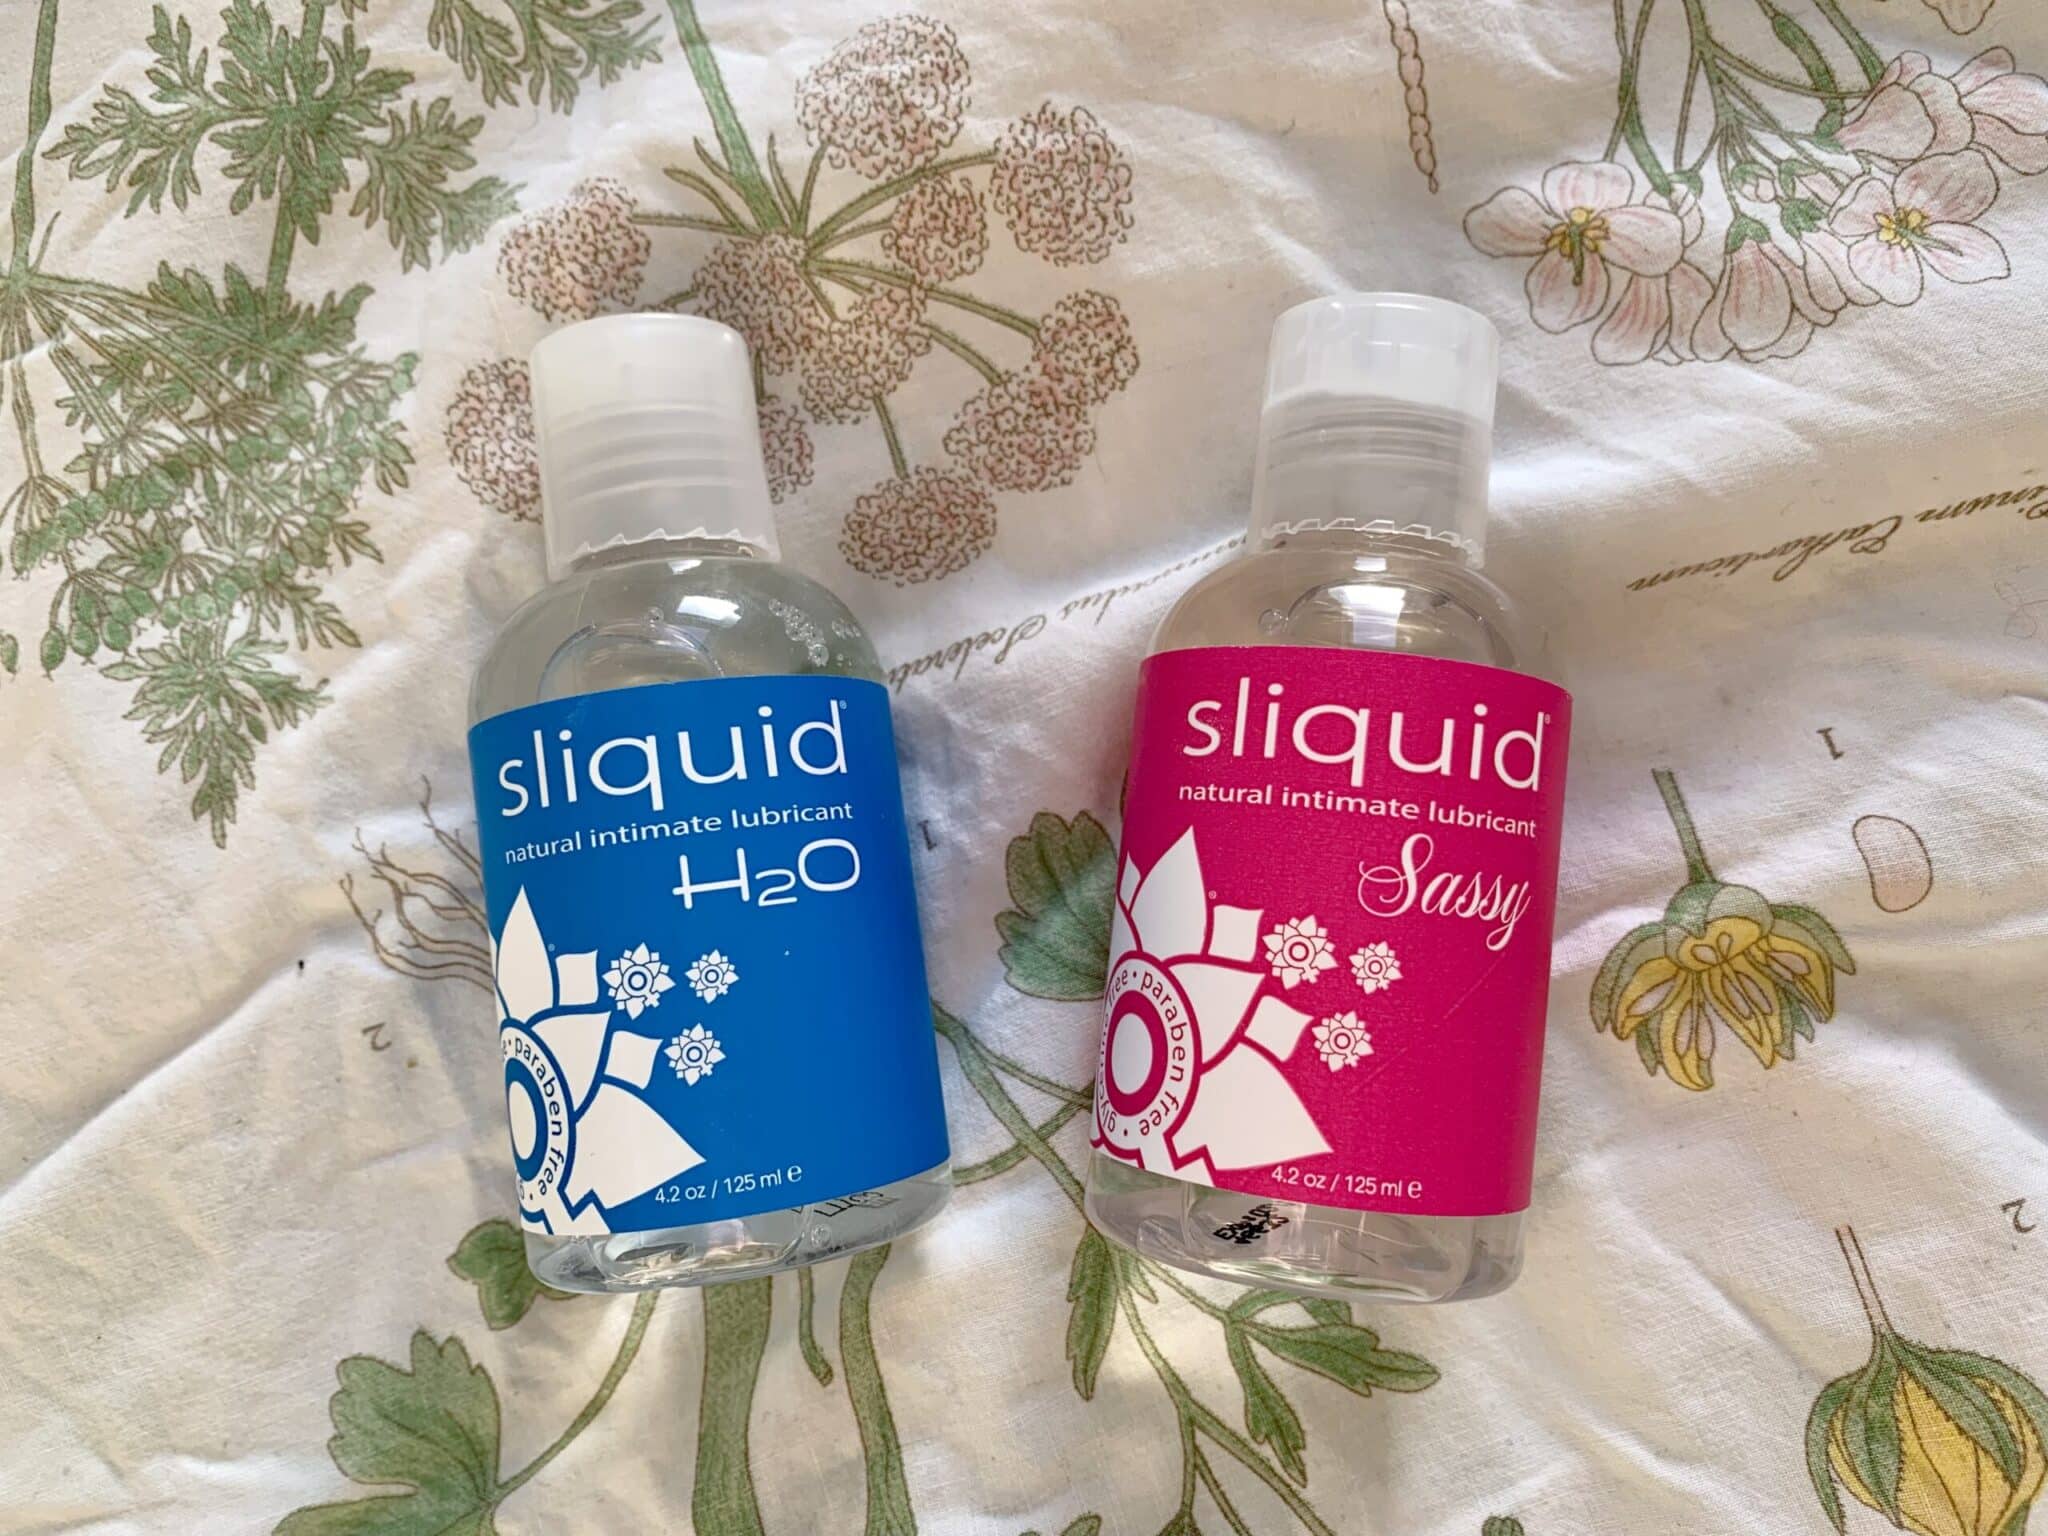 Sliquid H2O The Art of Presentation: The Sliquid H2O’s Packaging